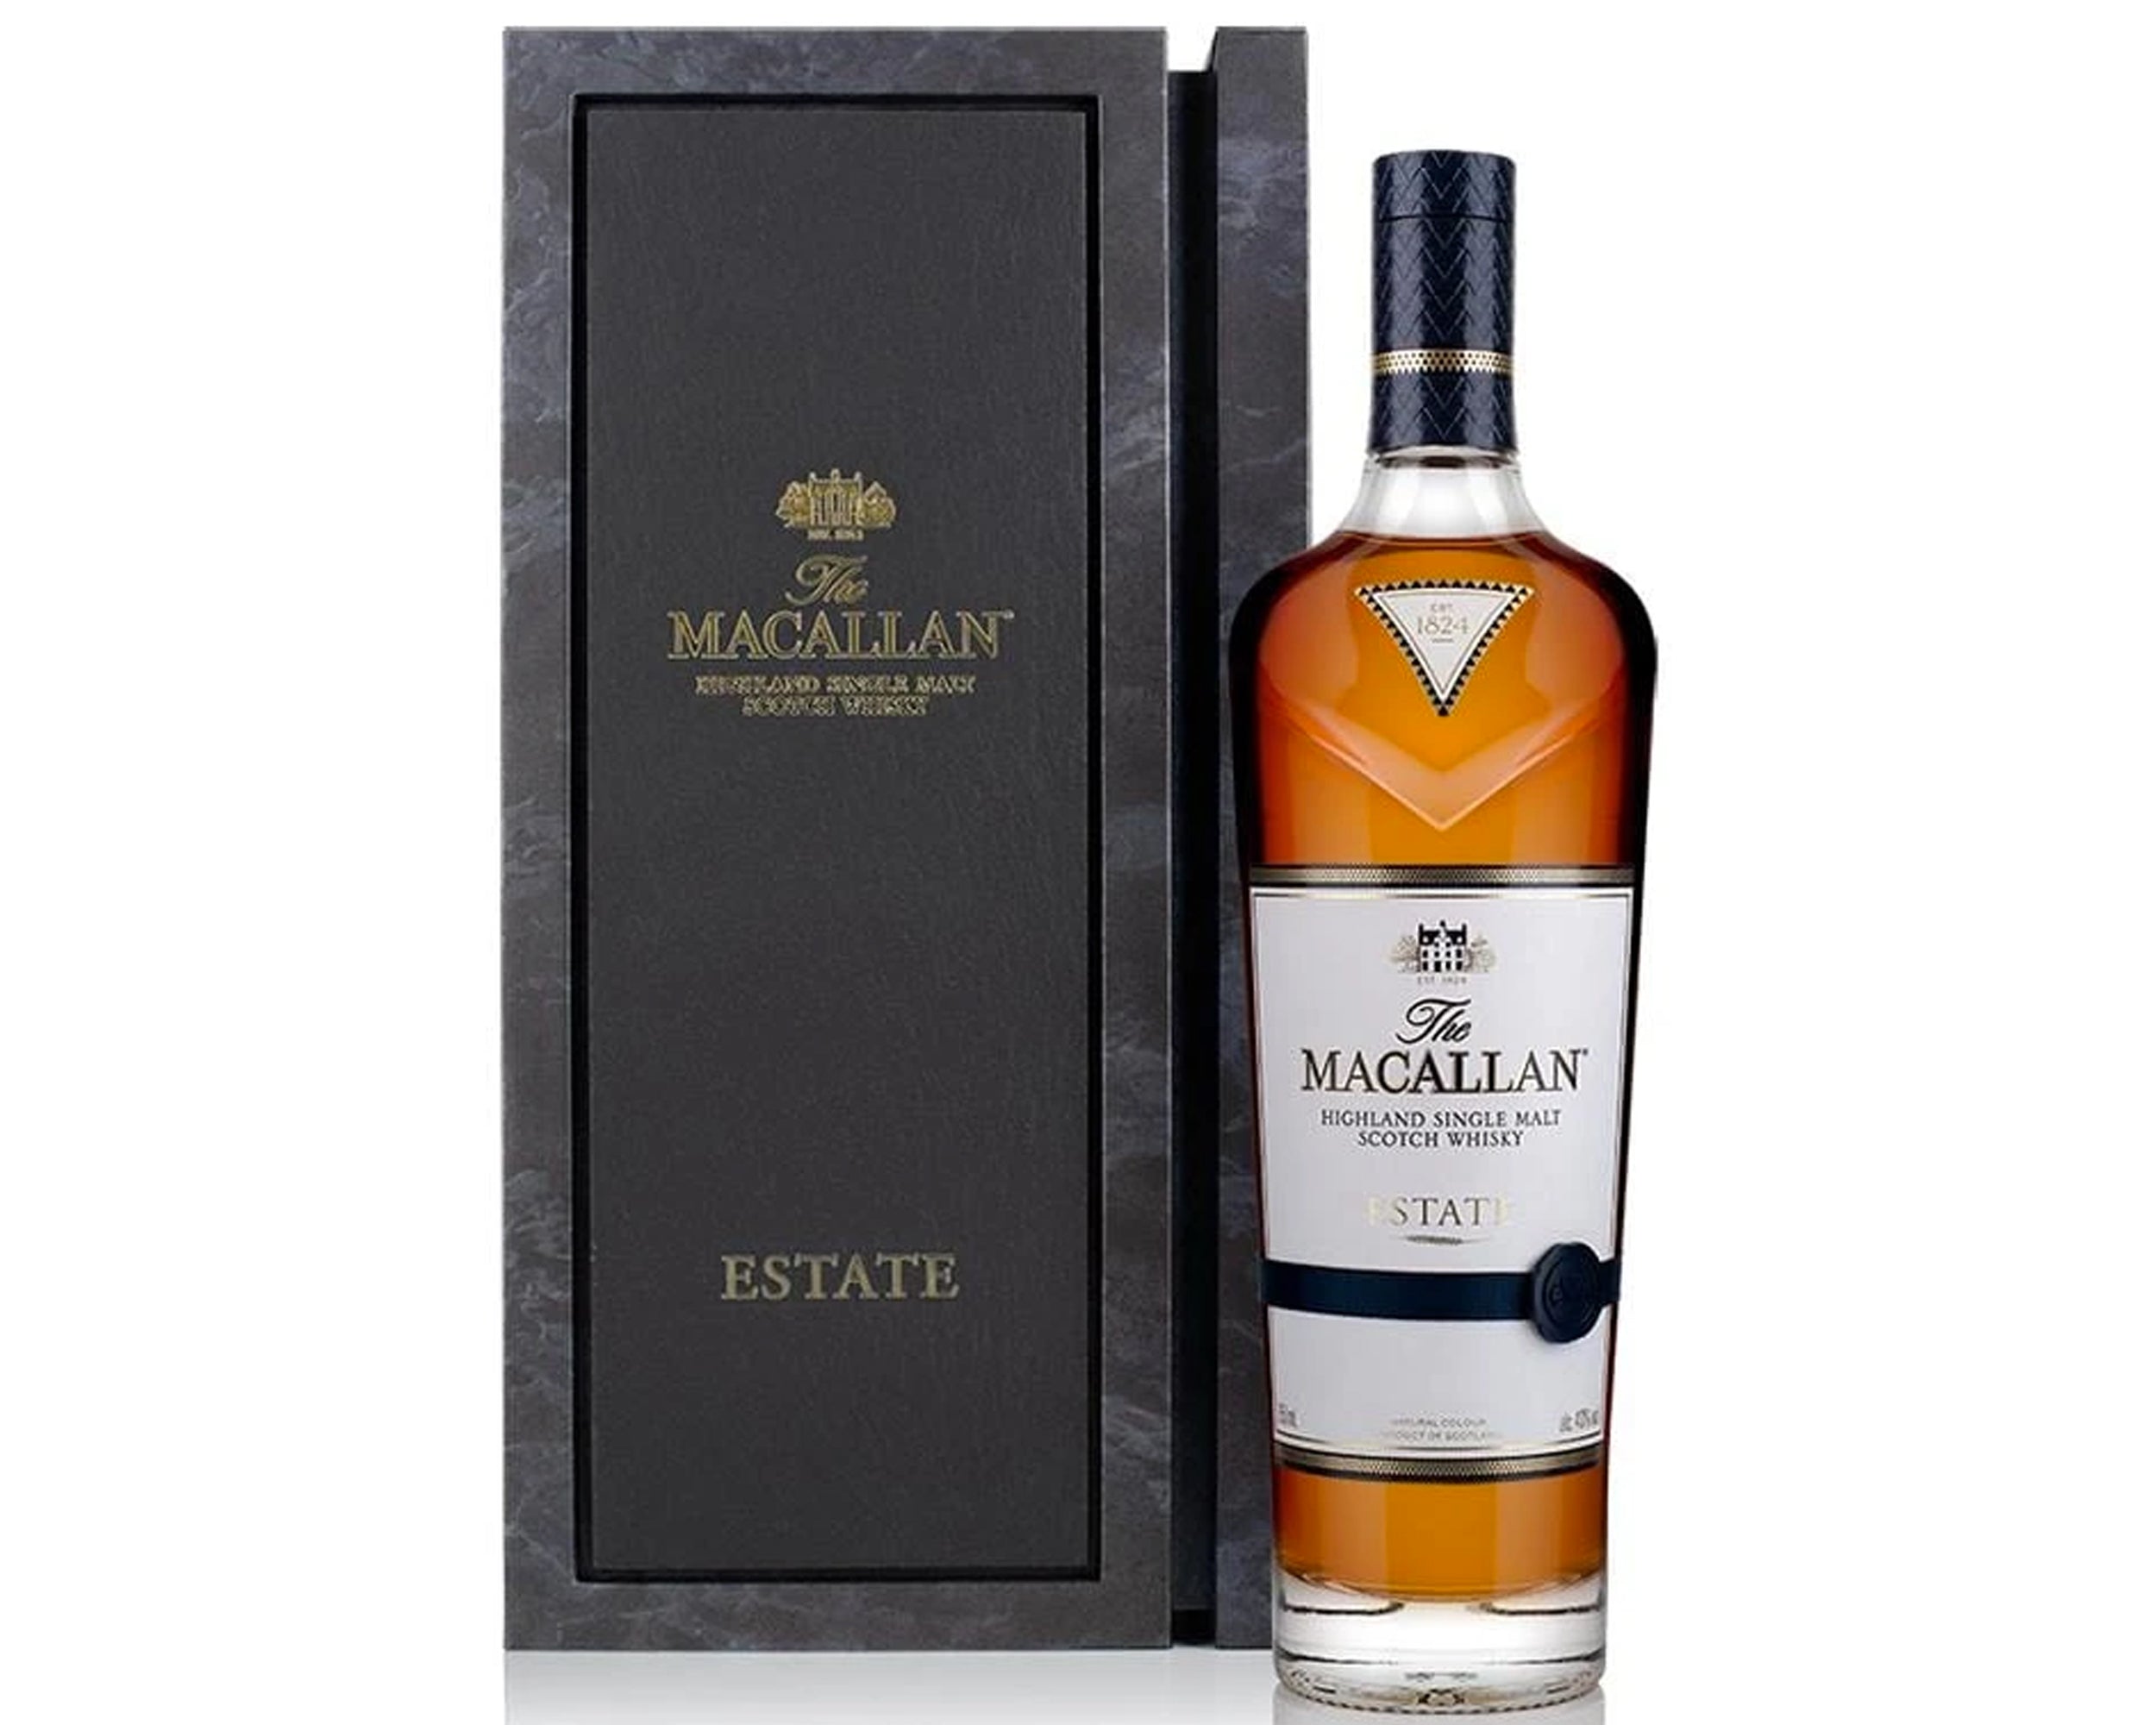 The Macallan Estate Scotch Whisky